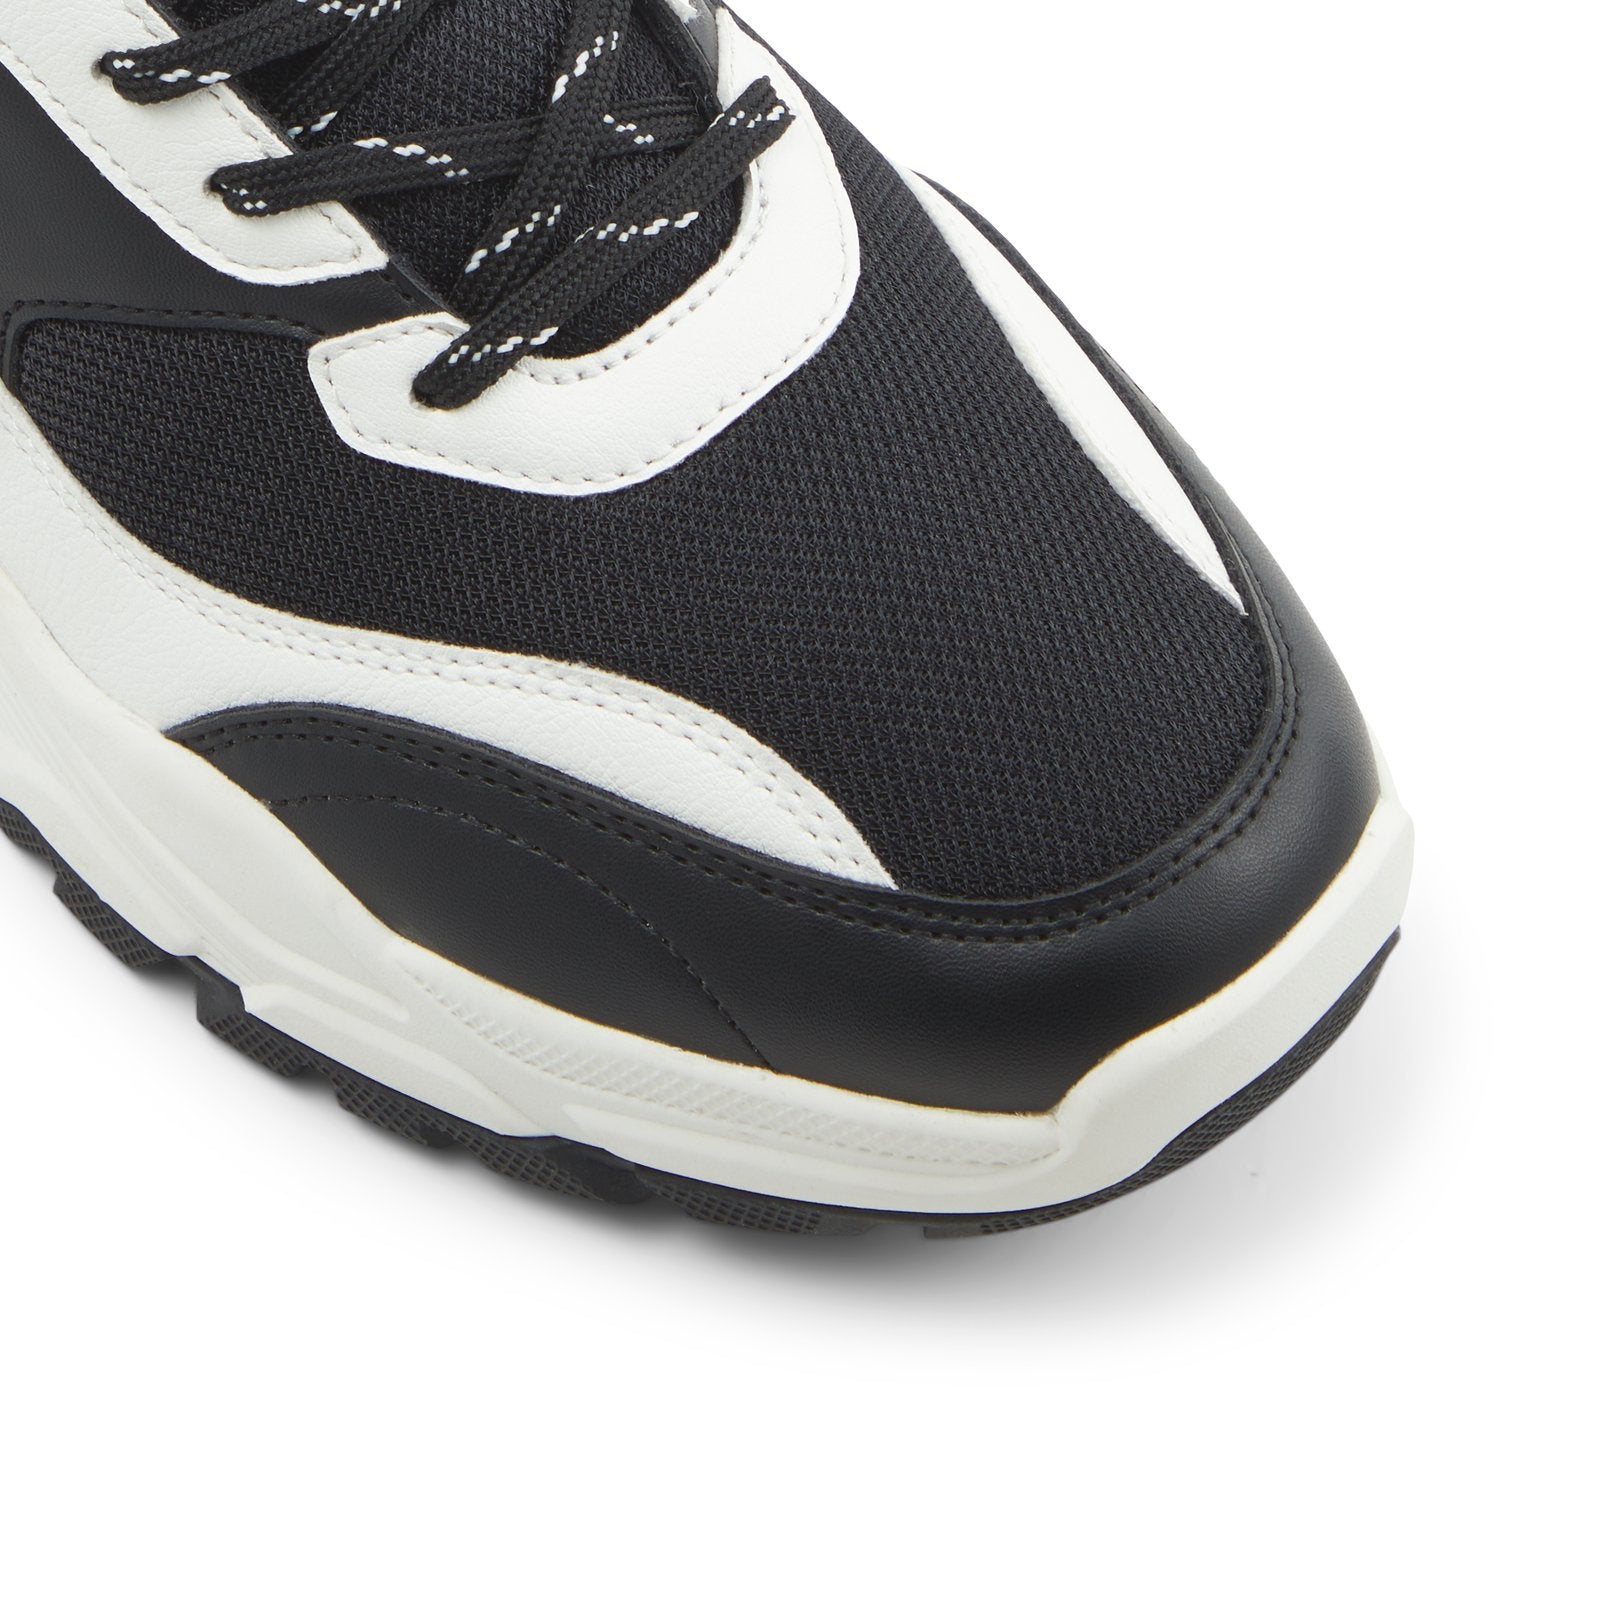 Mainstay Men Shoes - Black-White - CALL IT SPRING KSA